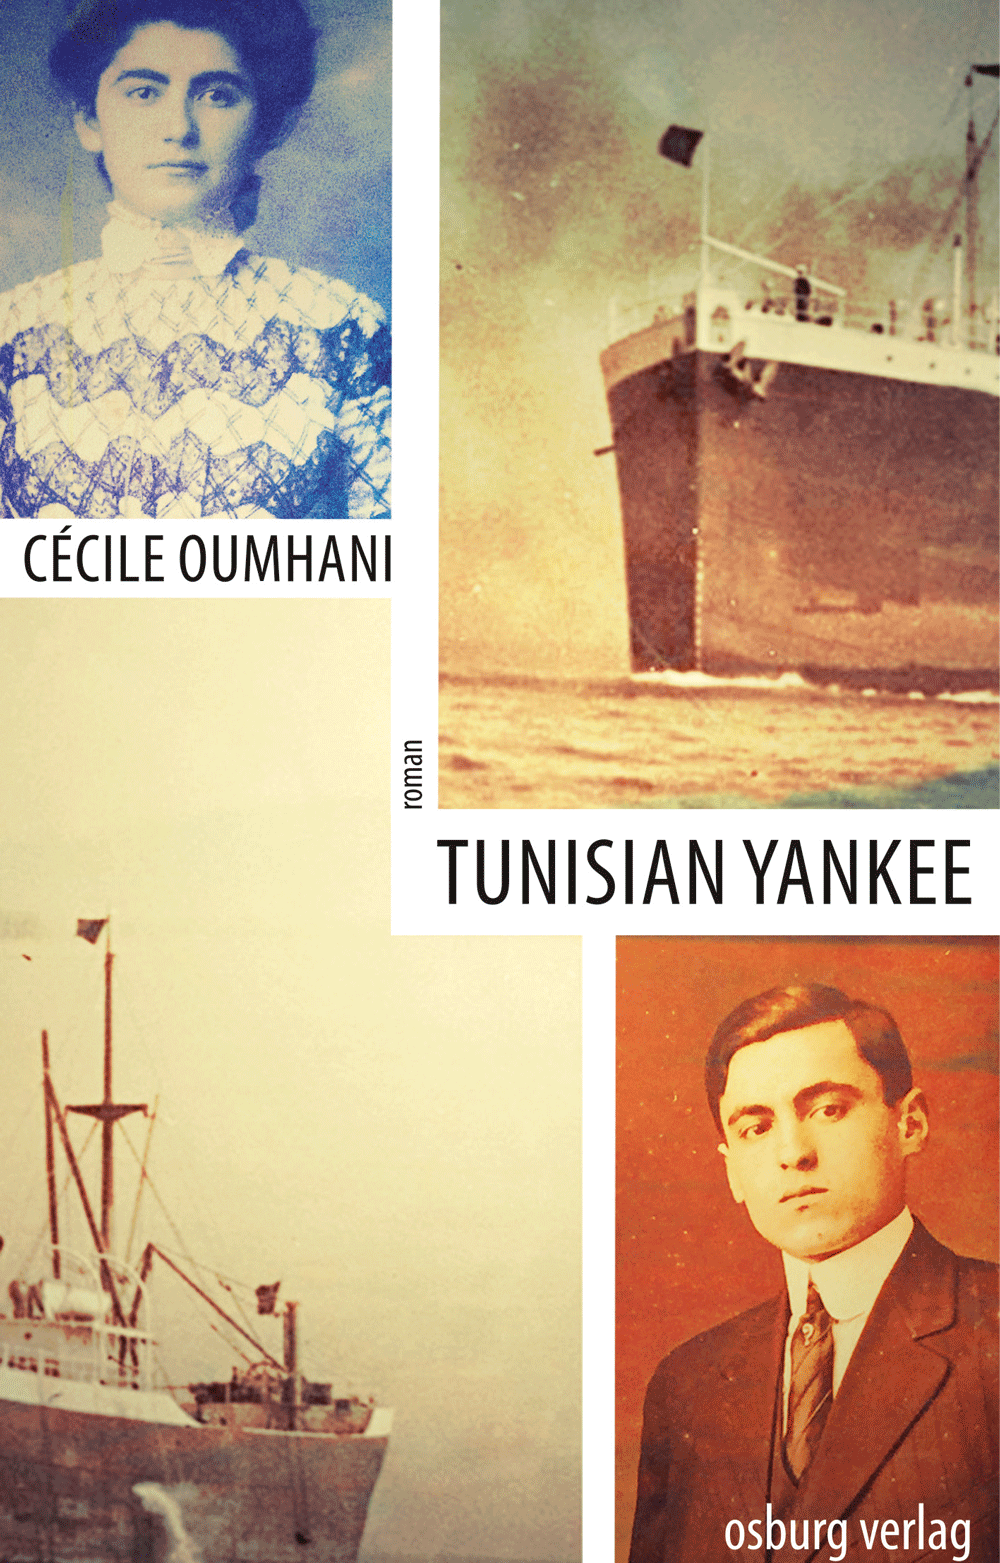 Buchcover "Tunisian Yankee" von Cécile Oumhani; Quelle: Osburg Verlag 